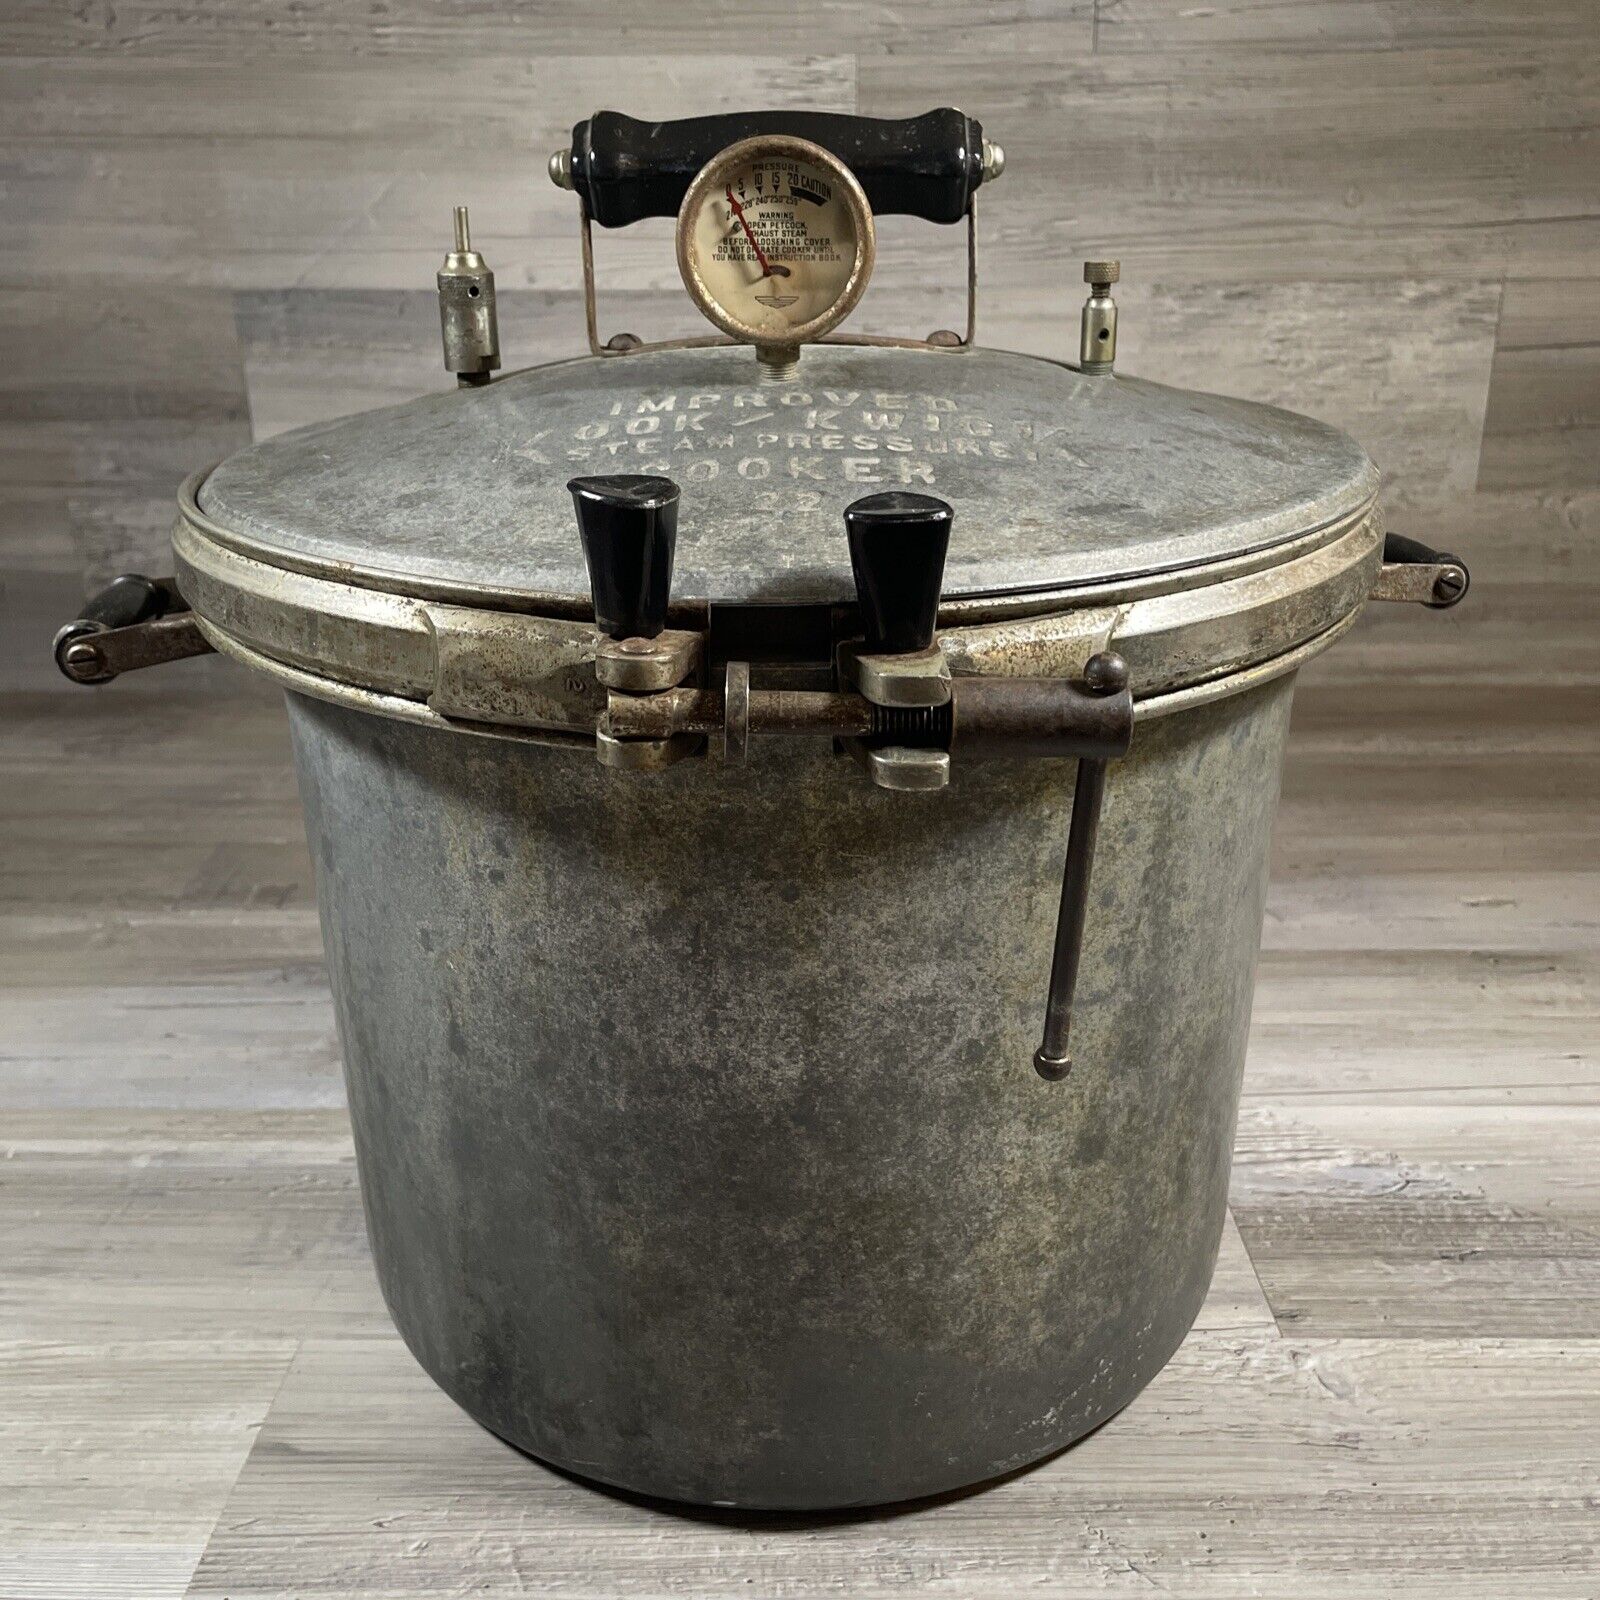 Vintage Kook Kwick Steam Pressure Cooker No. 22 Canner Untested Selling As Is